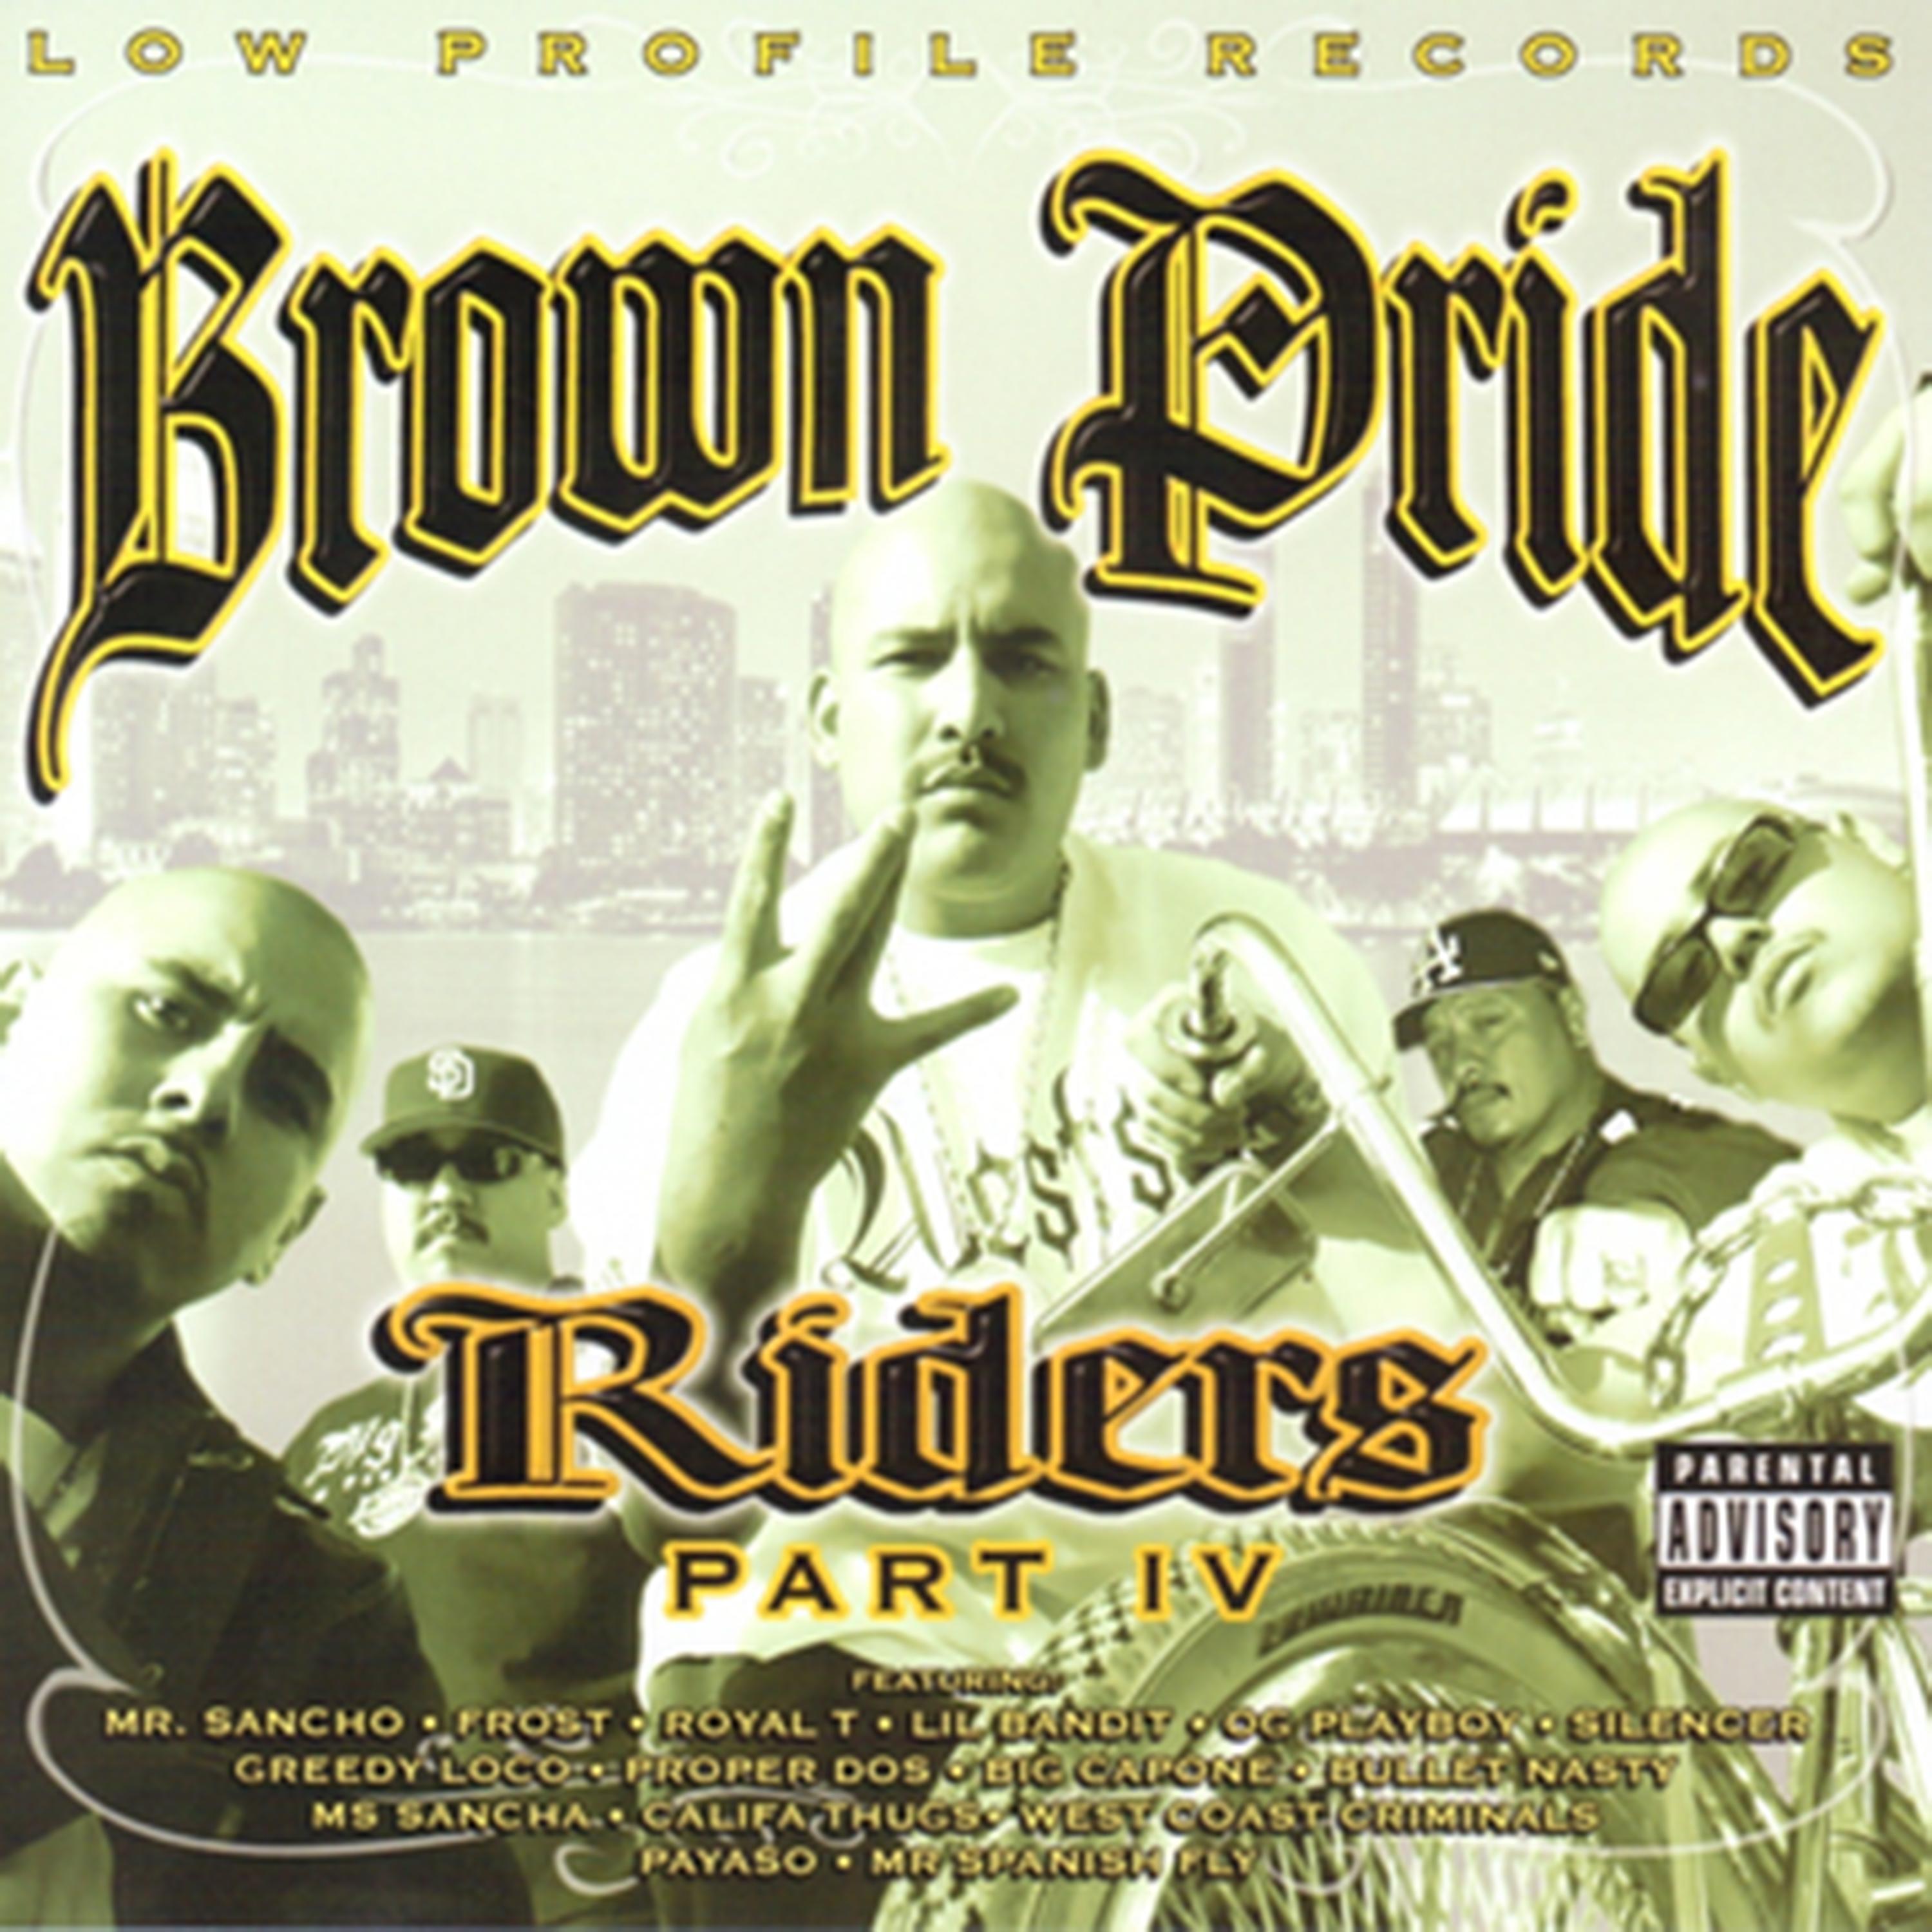 Brown Pride Riders Vol. 4